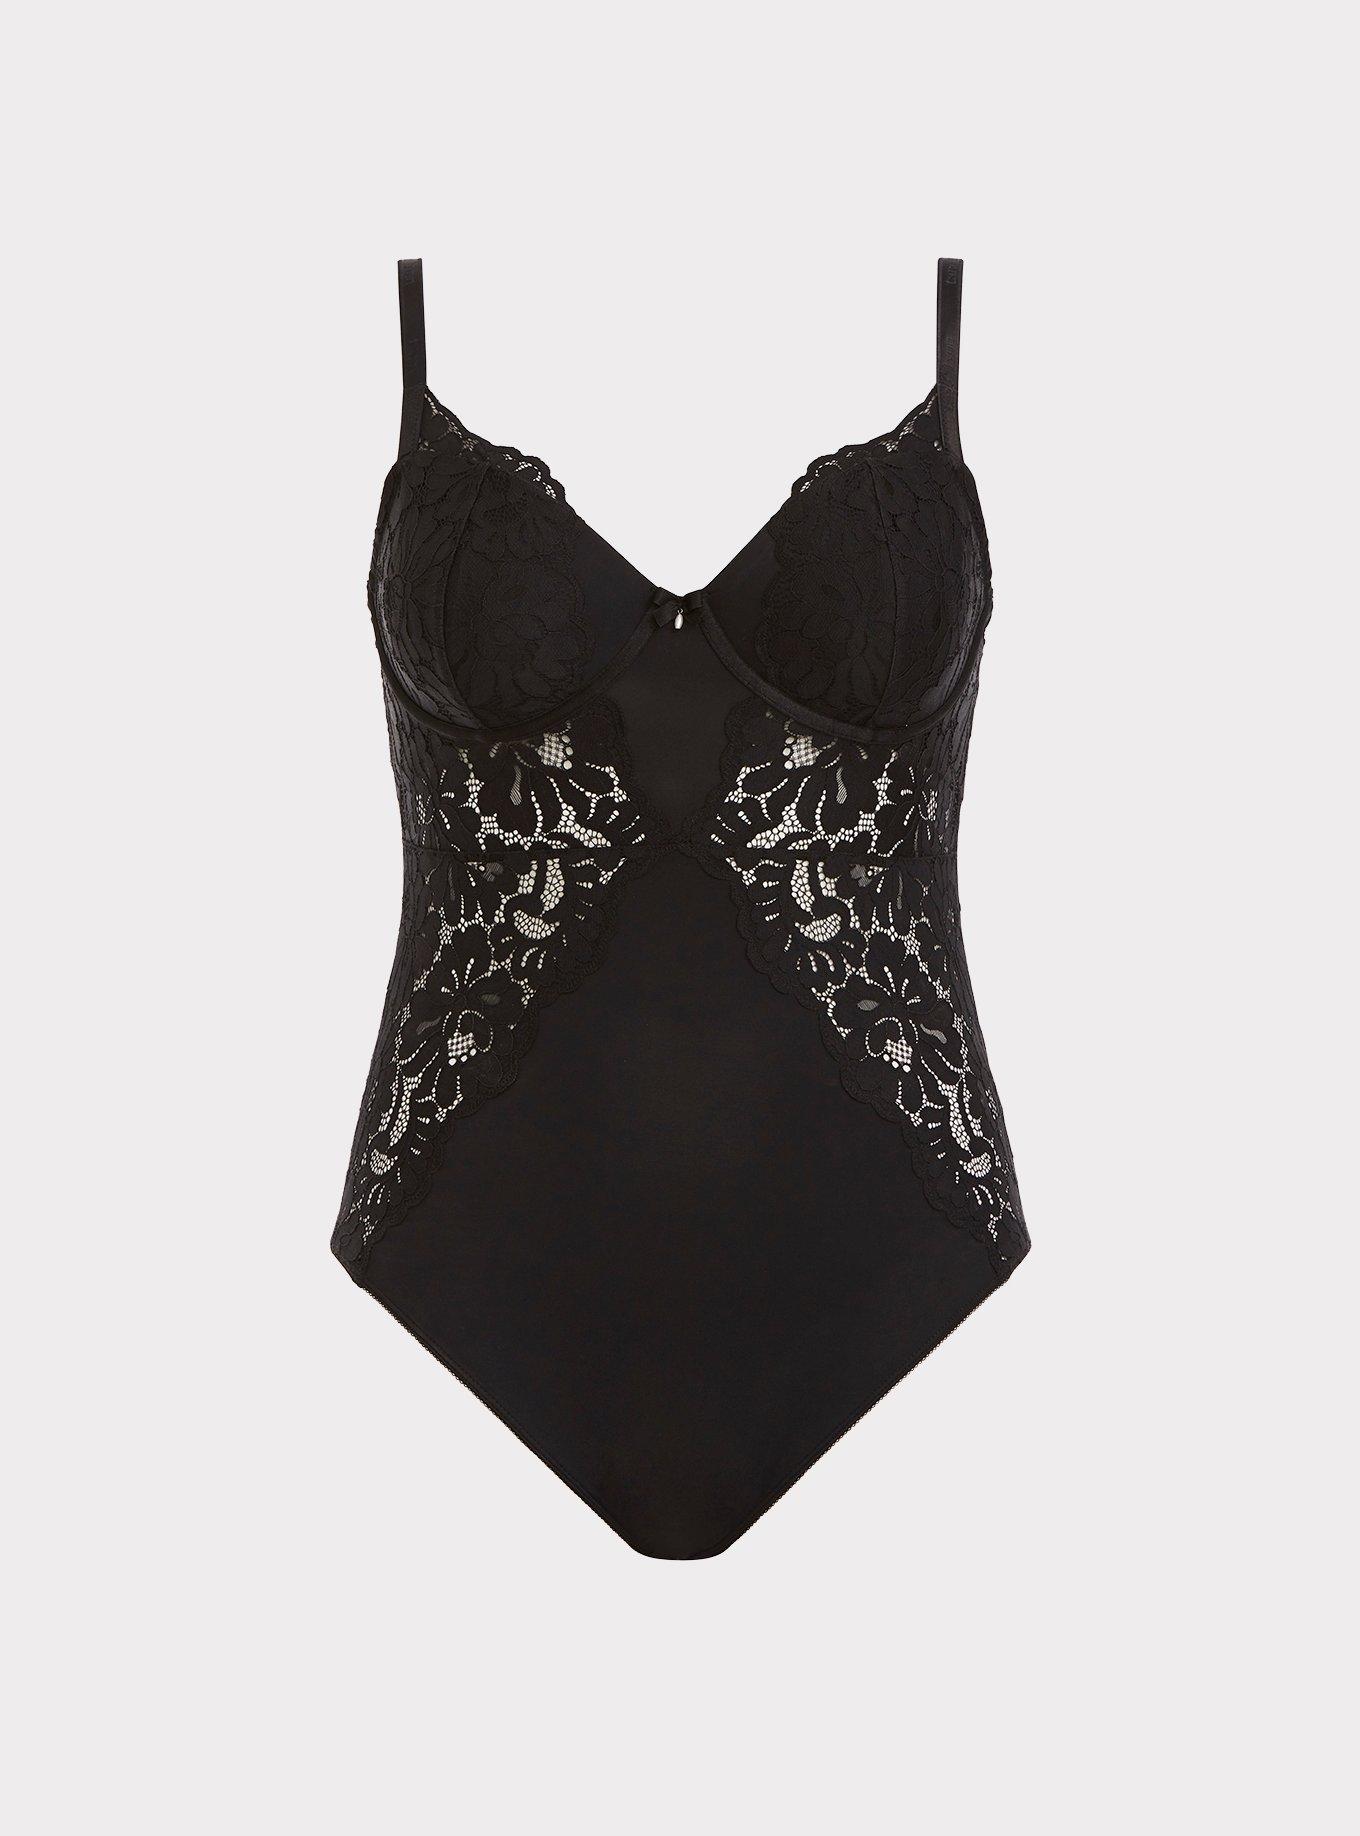 Plus Size - Tara Lynn - Microfiber & Lace Bodysuit - Torrid